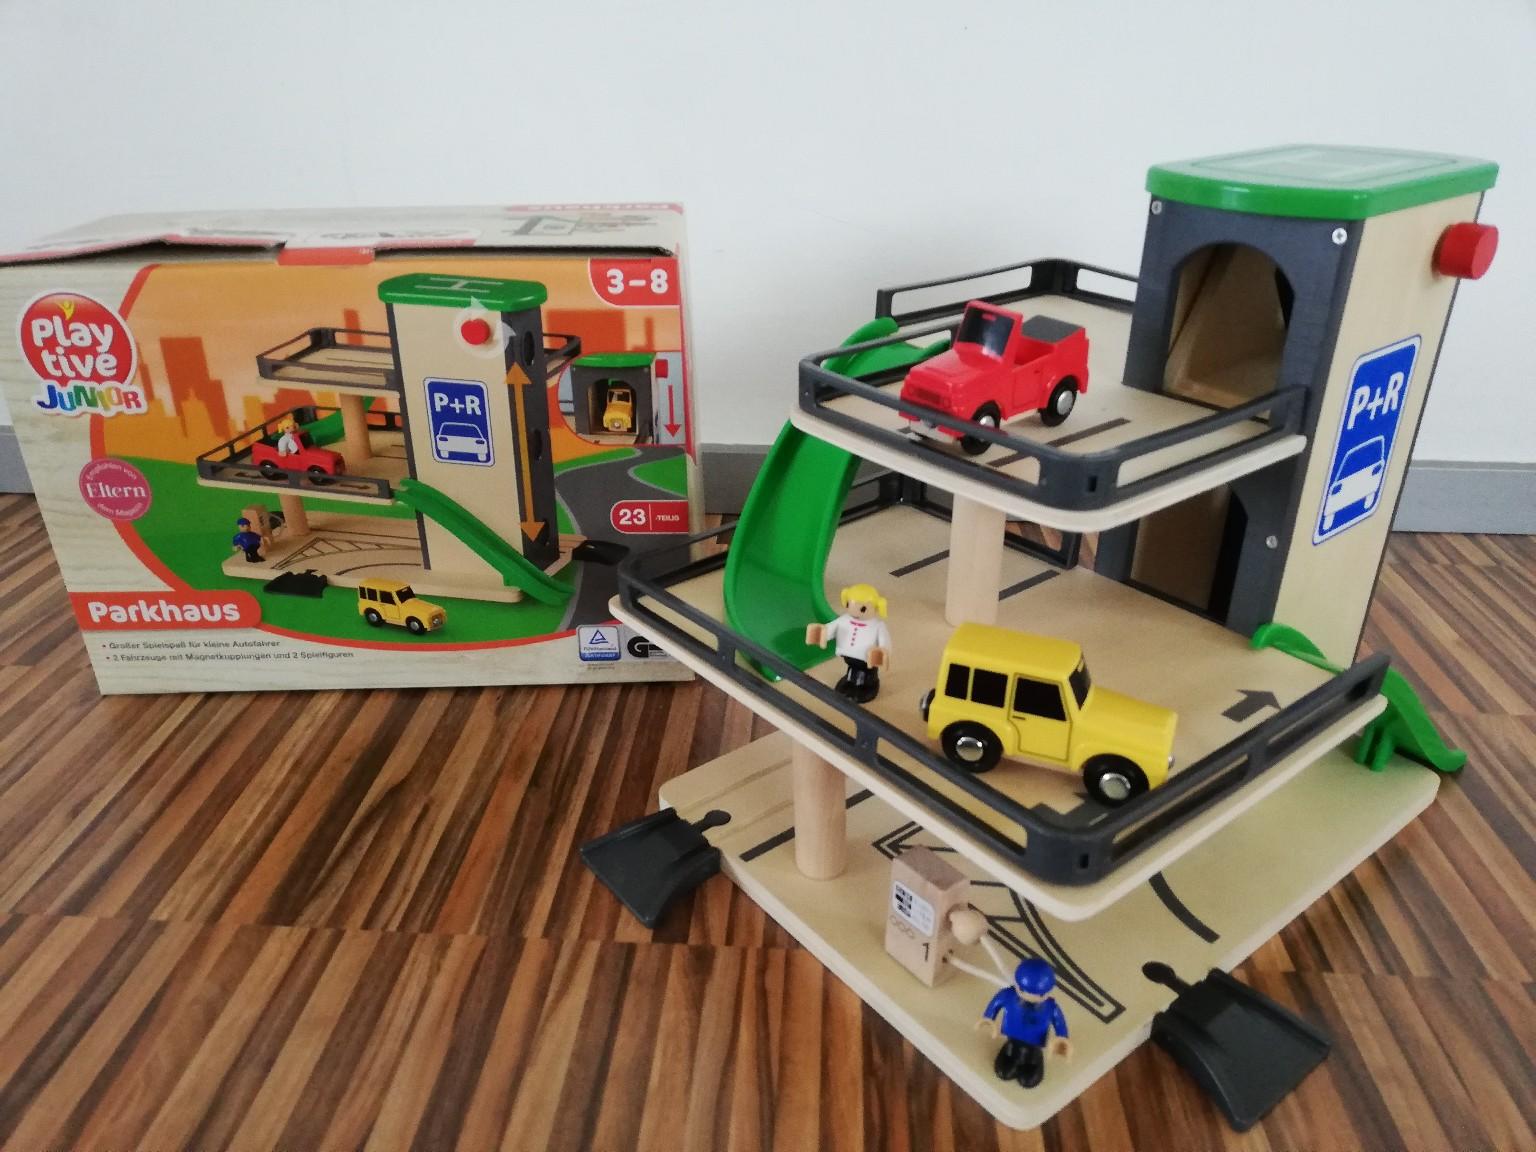 Holz Parkhaus Parking Echtholz Kinderspielzeug PlayTive Junior ab 3 jahren Neu 